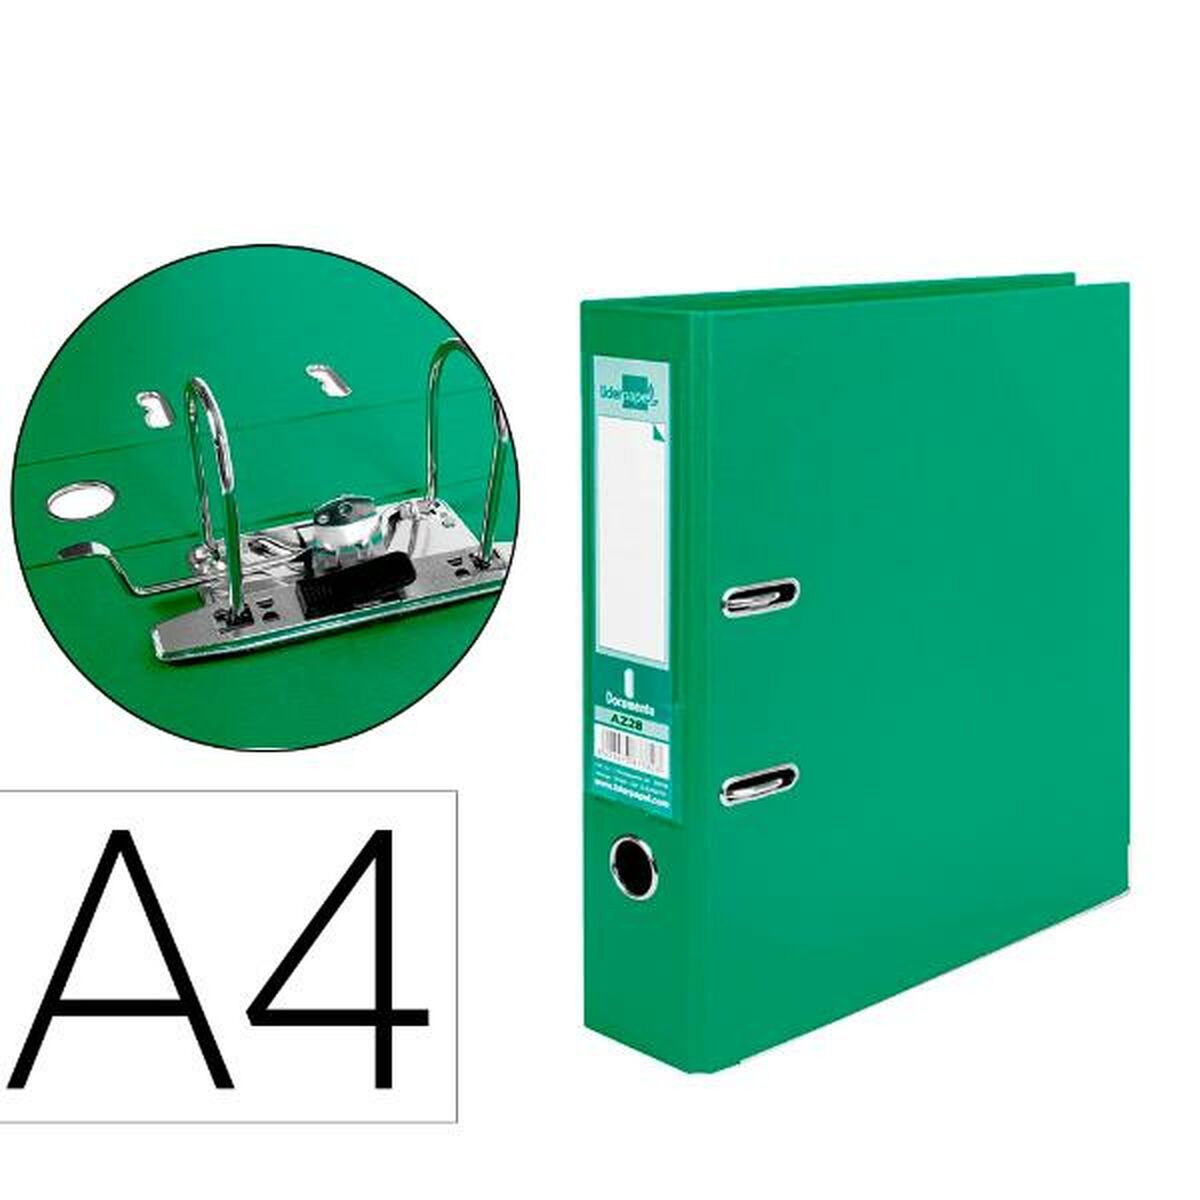 Ring binder Liderpapel AZ28 Green A4 (1 Unit)